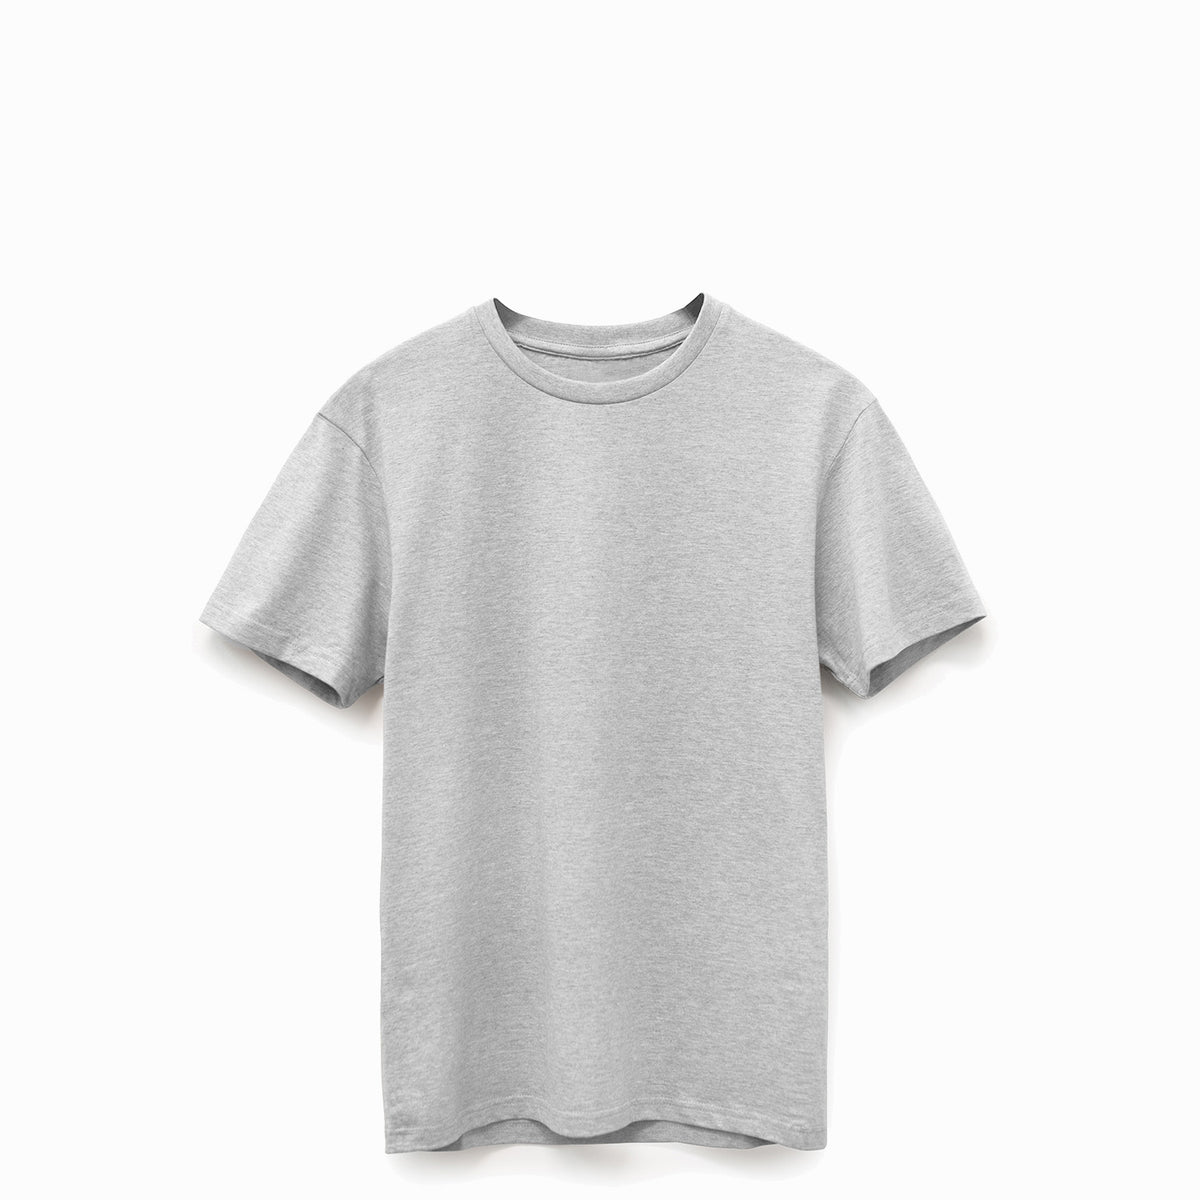 blank gray t shirt